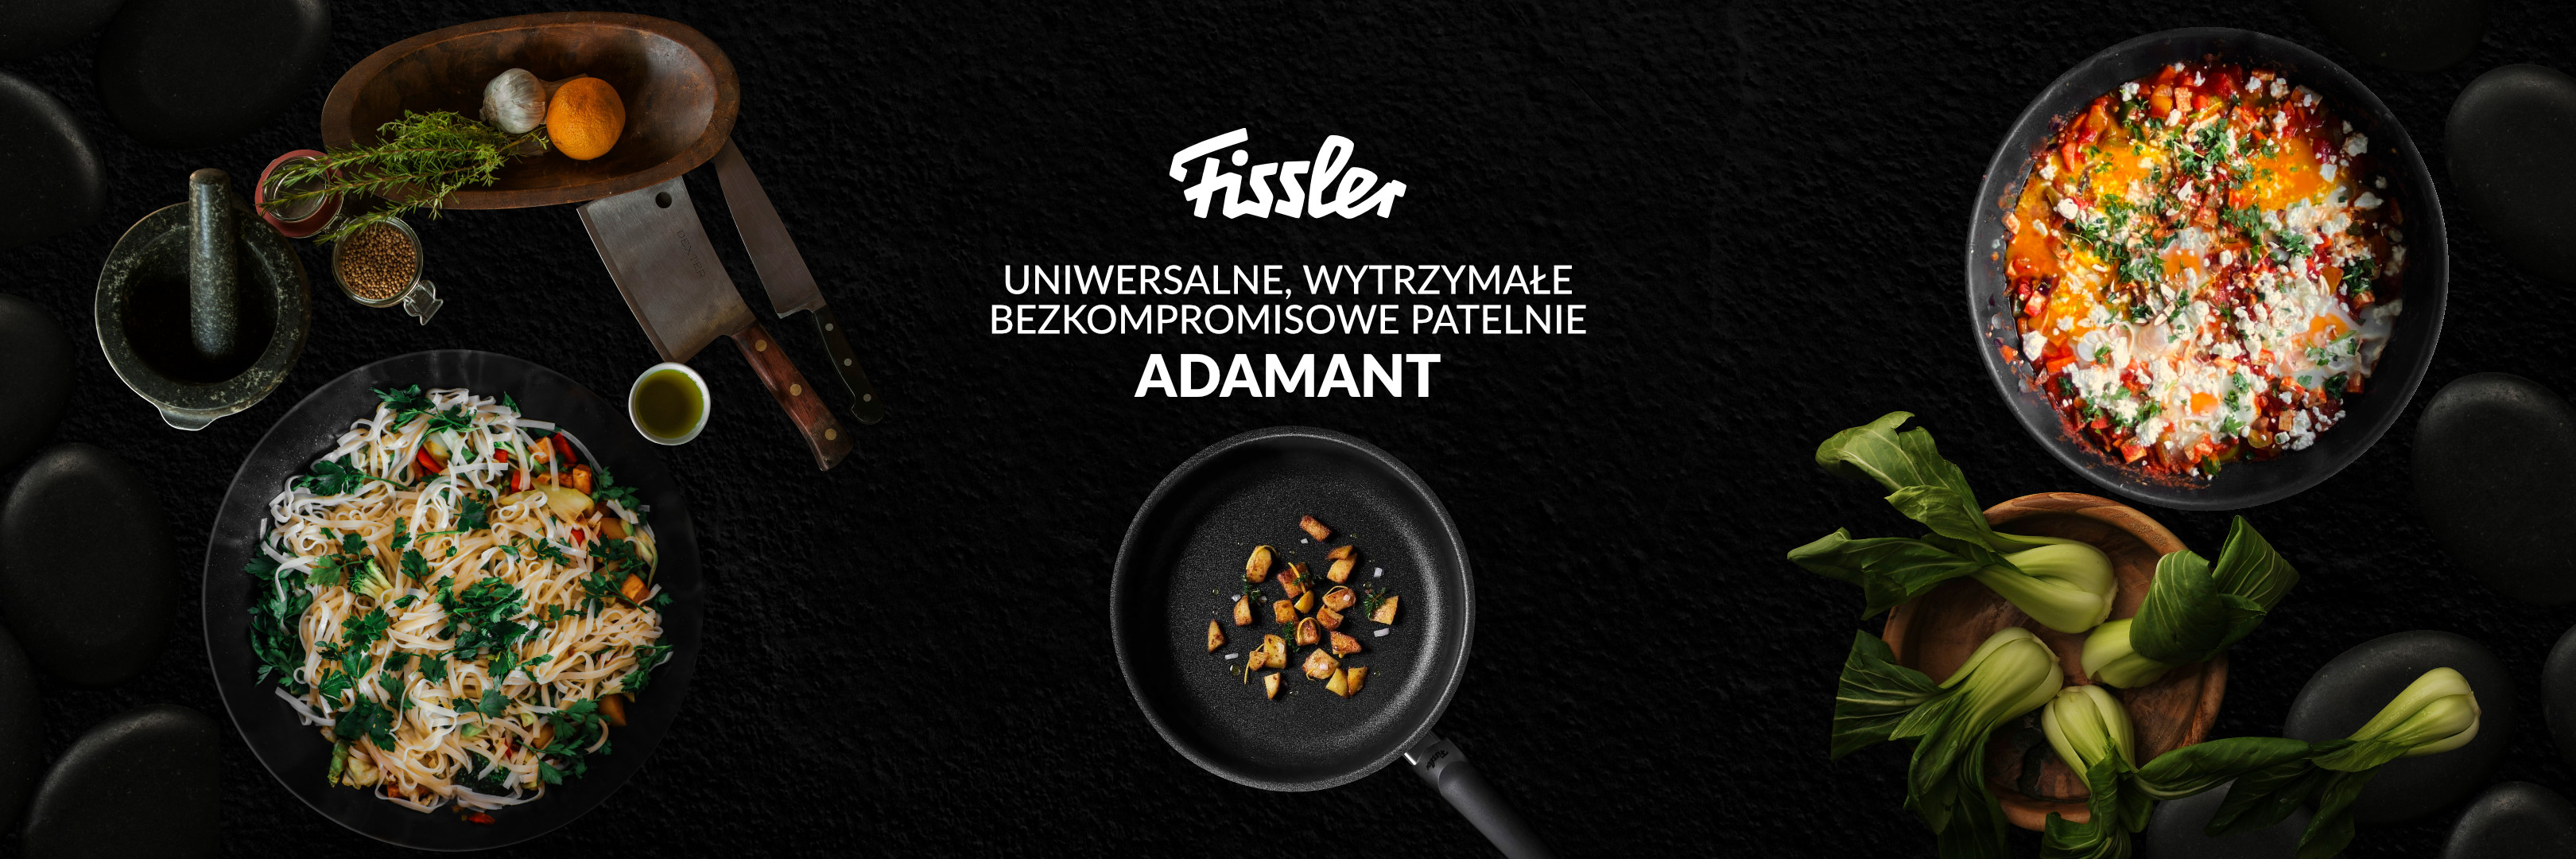 Fissler Page - Adamant